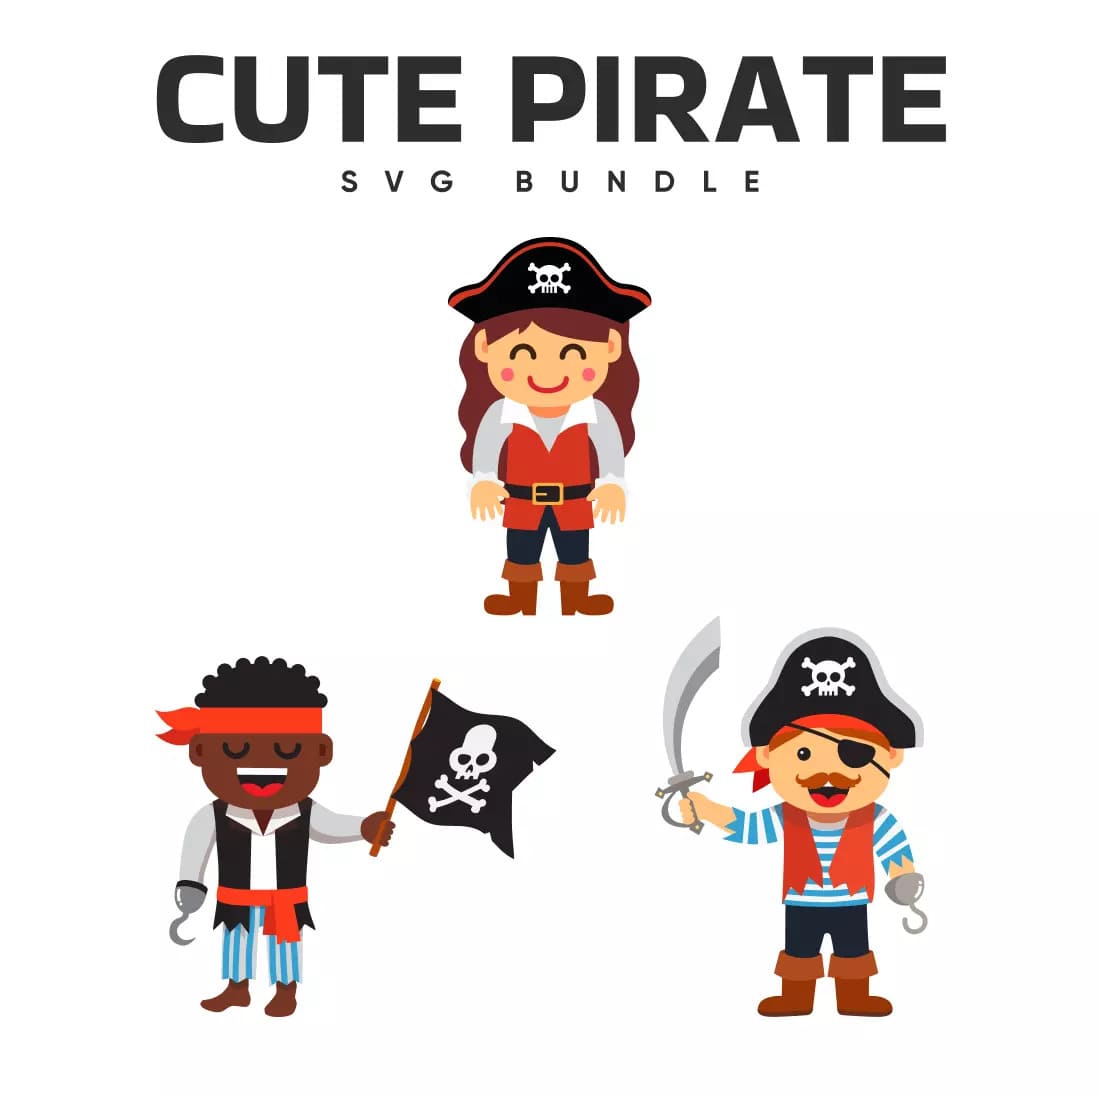 Cute Pirate SVG Bundle Preview image.